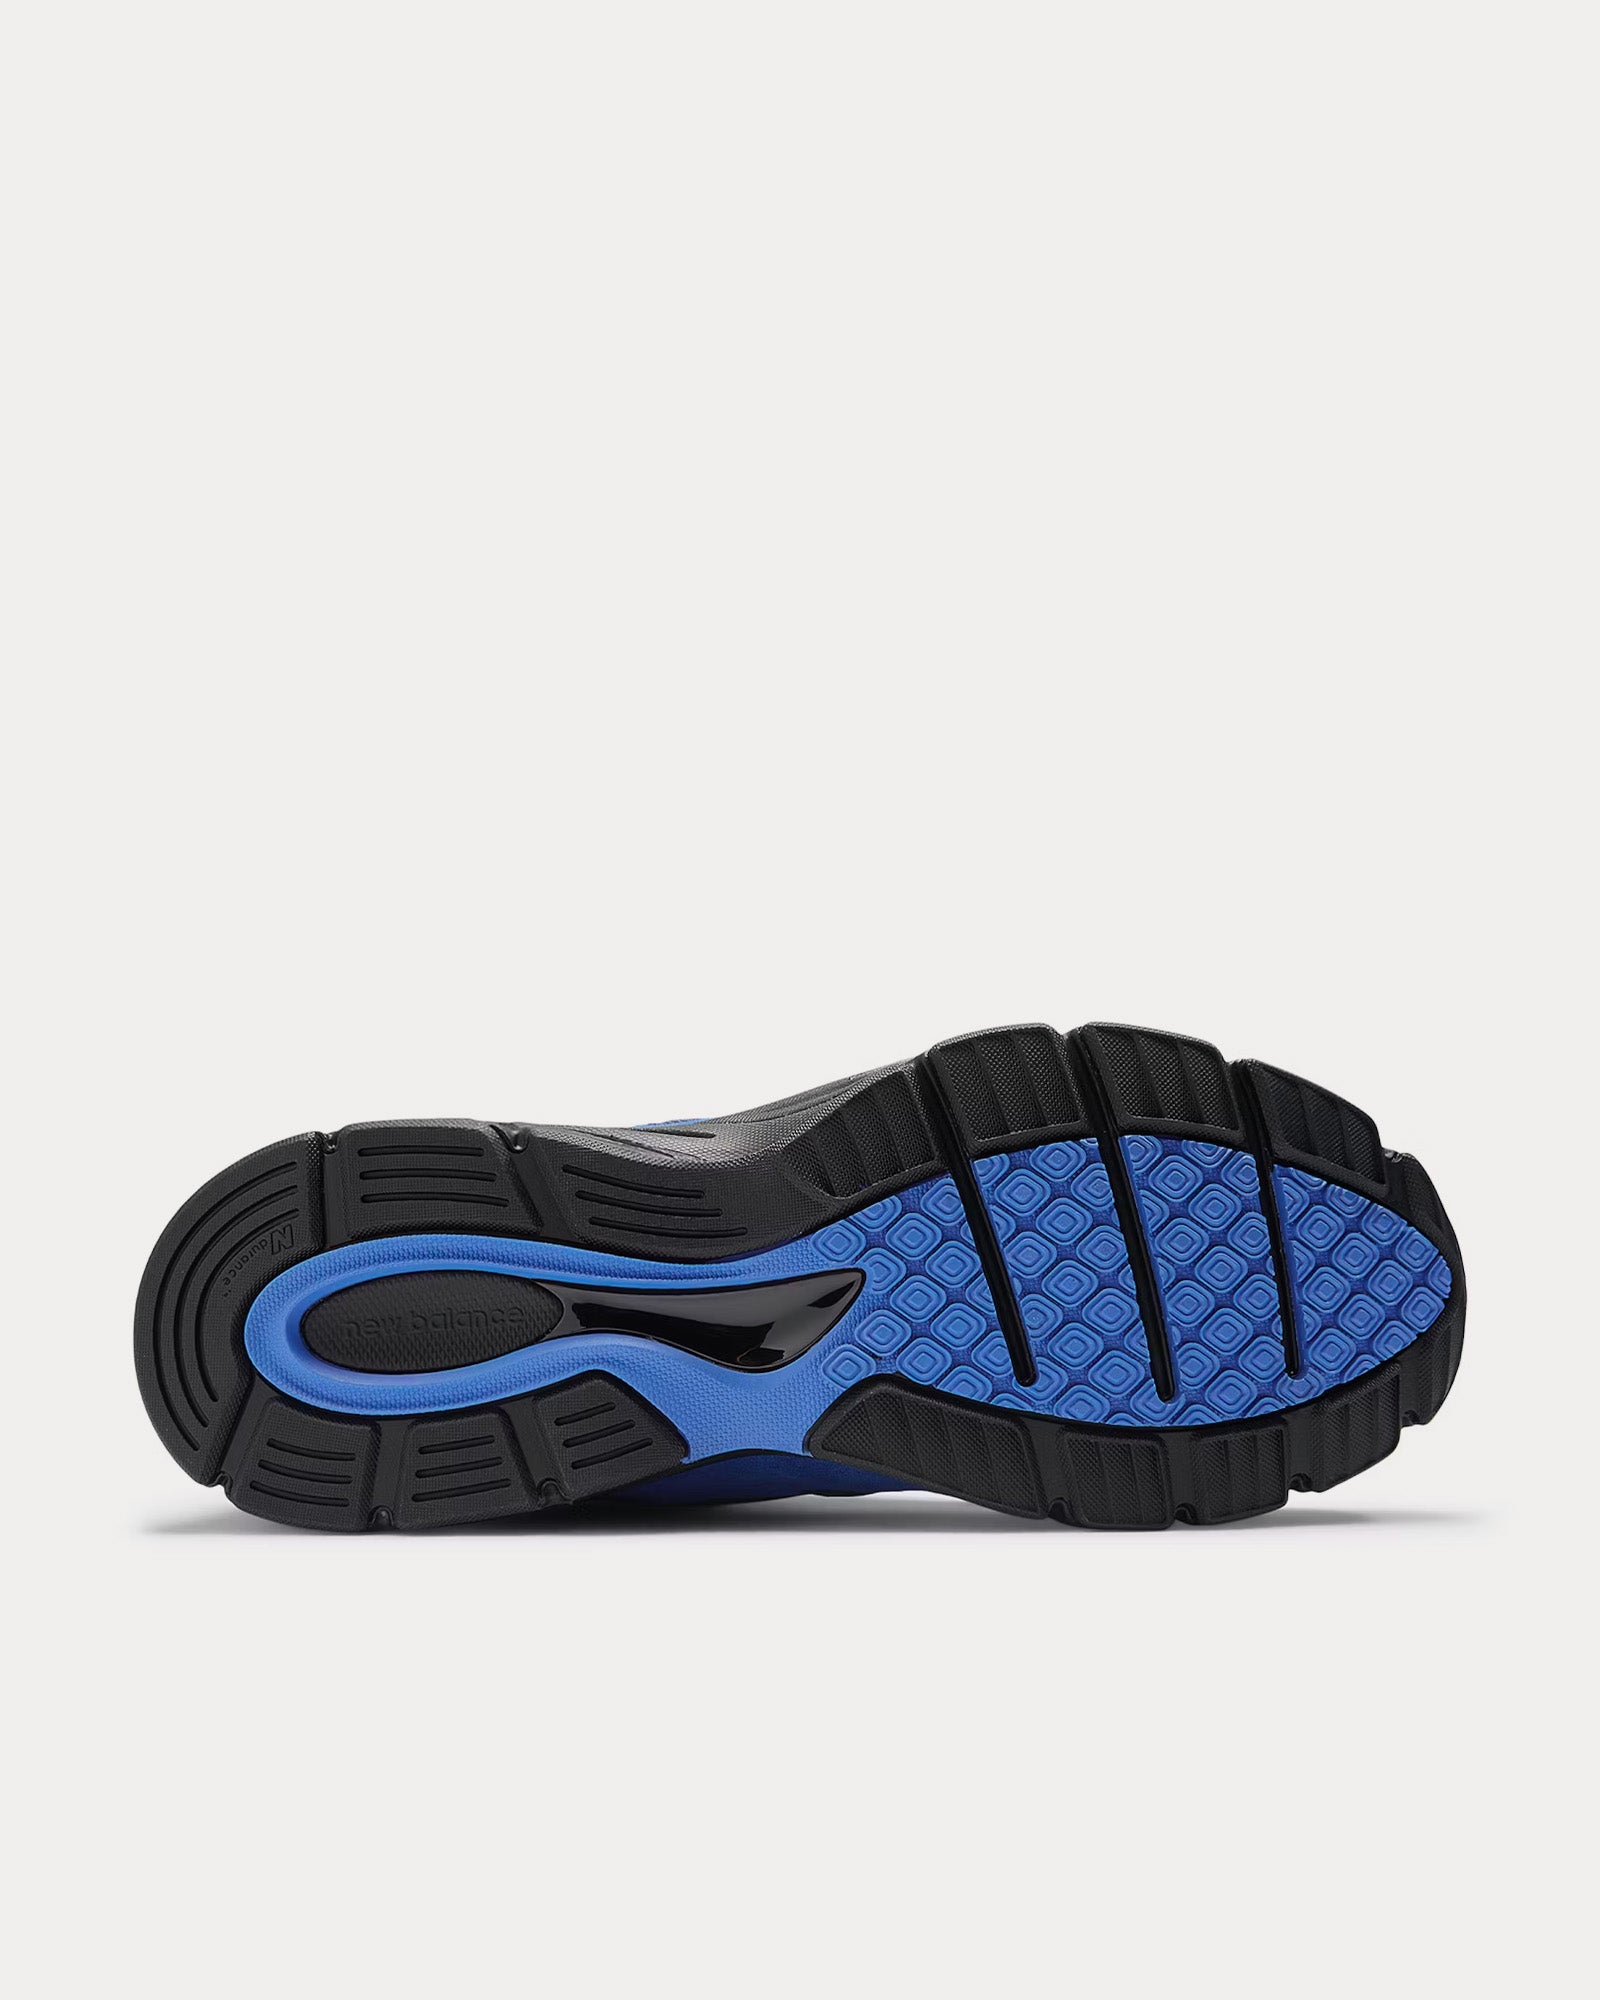 New Balance x Joe Freshgoods - Made in USA 990v4 'Keisha' Blue Low Top Sneakers